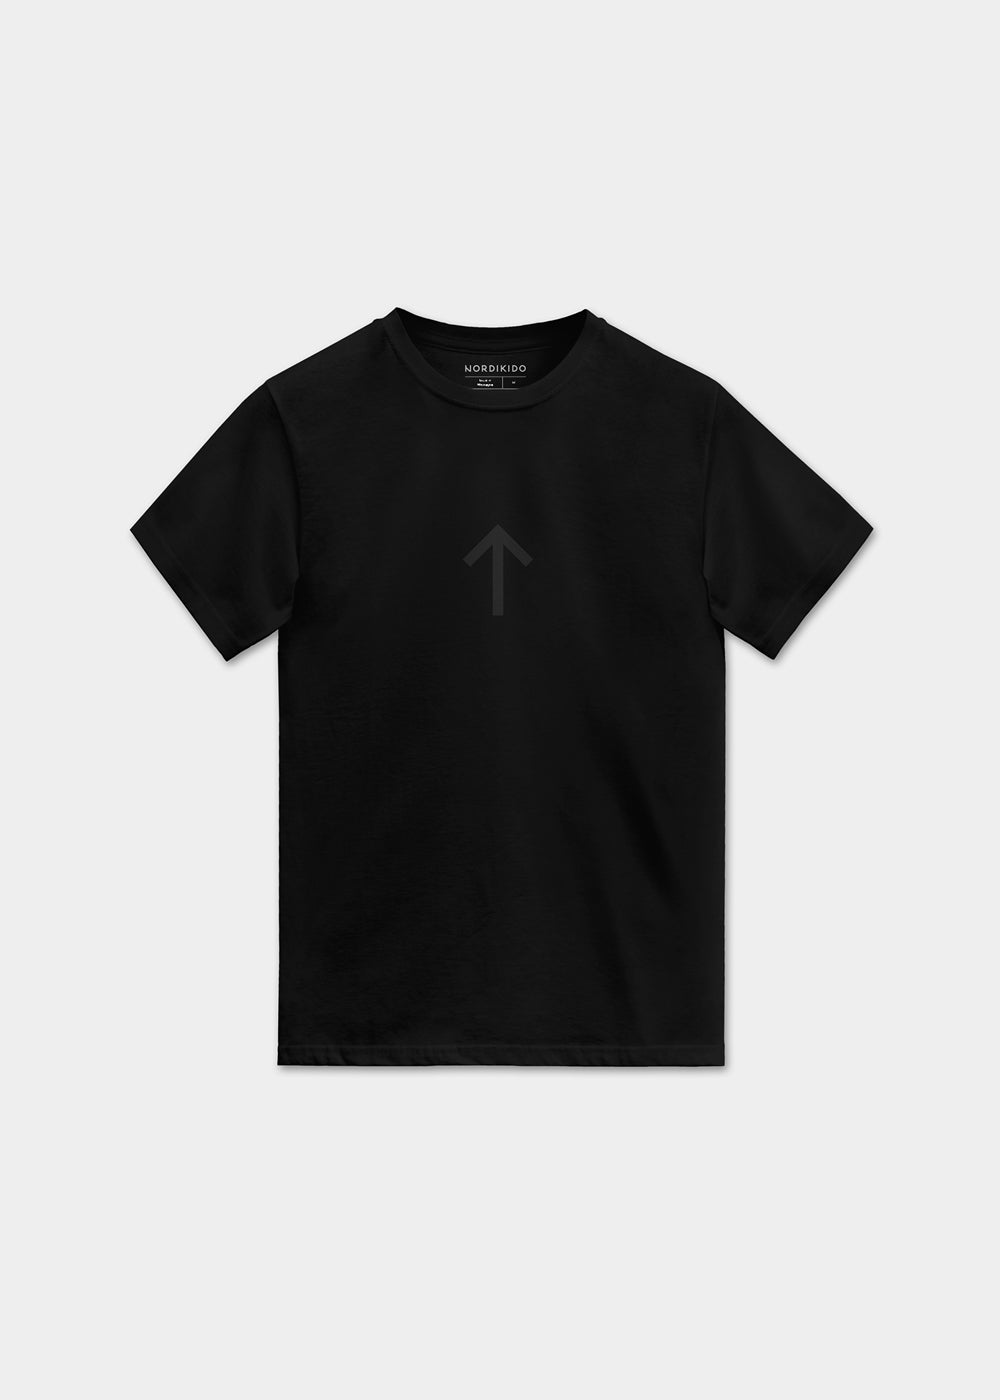 Tiwaz Rune T-shirt black that reflects Viking Culture and Minimalist Design. Elder Futhark